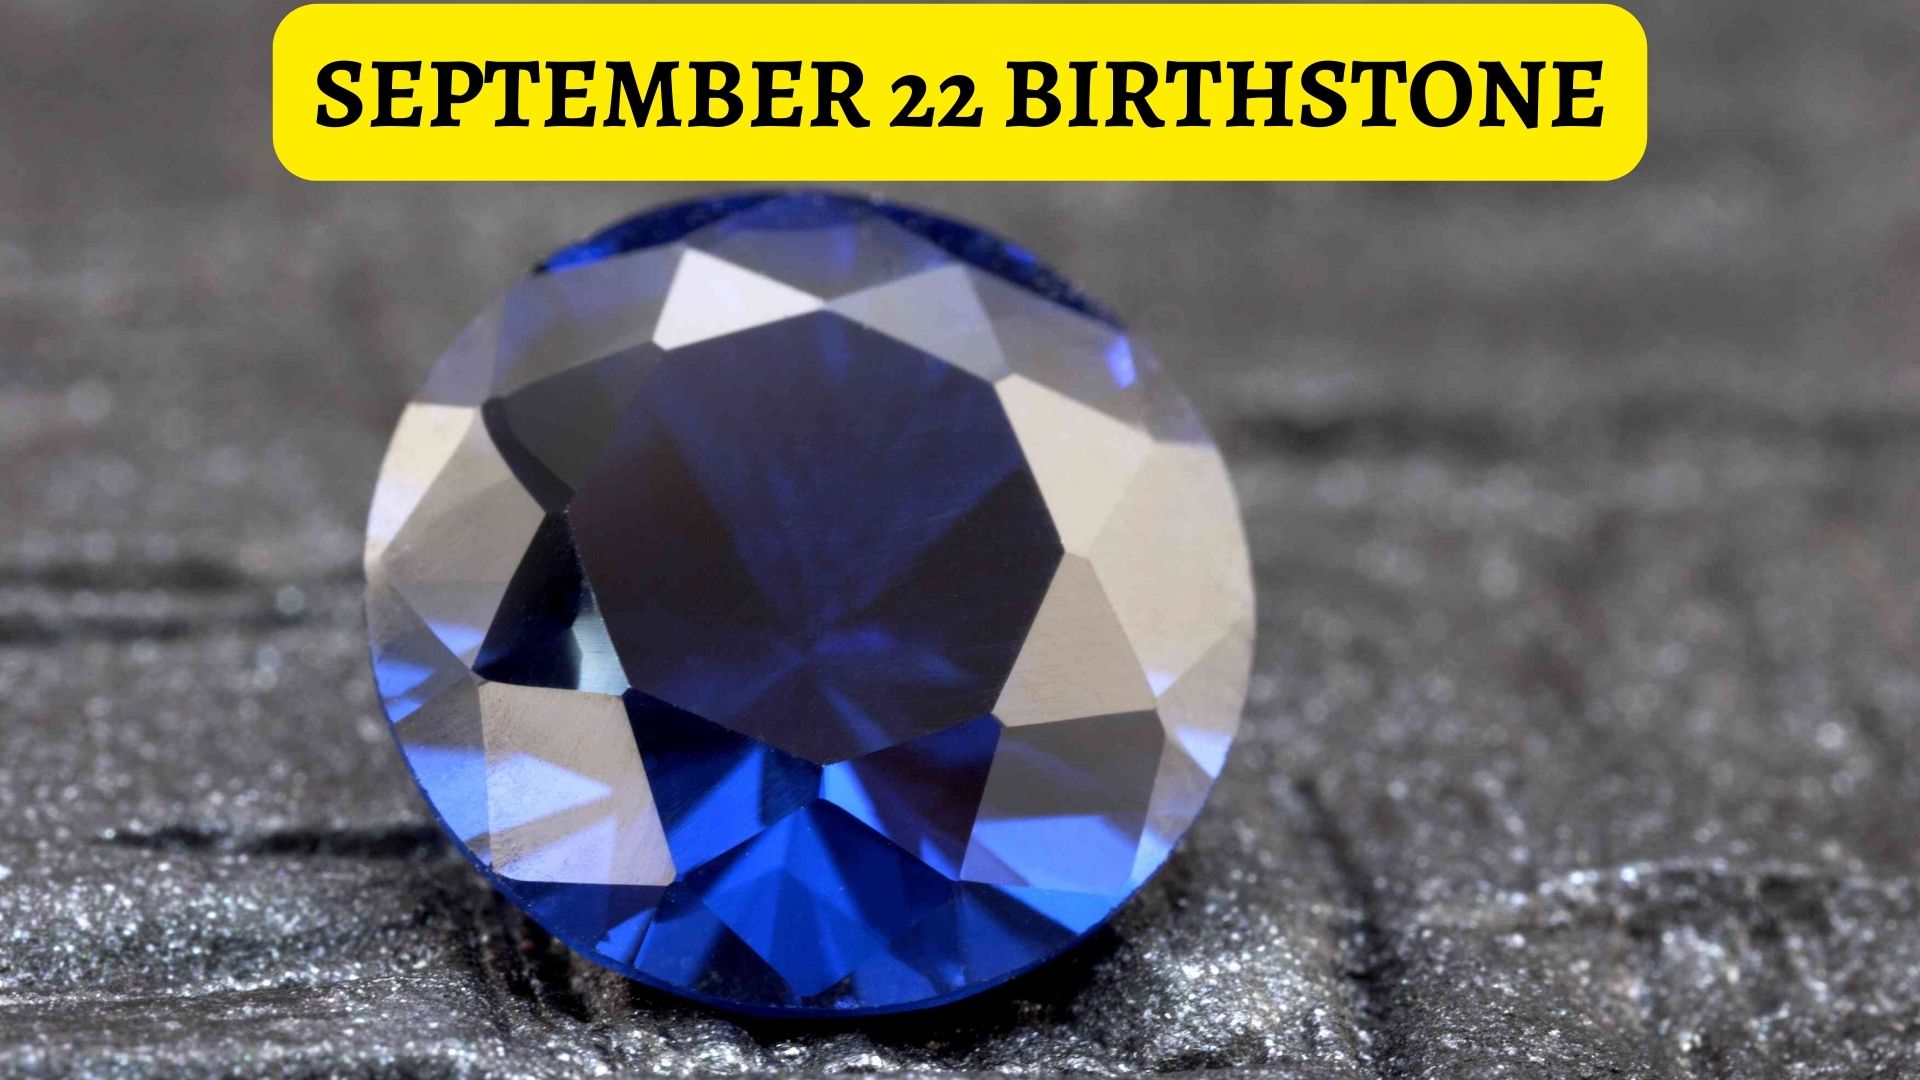 September 22 Birthstone - The Sapphire